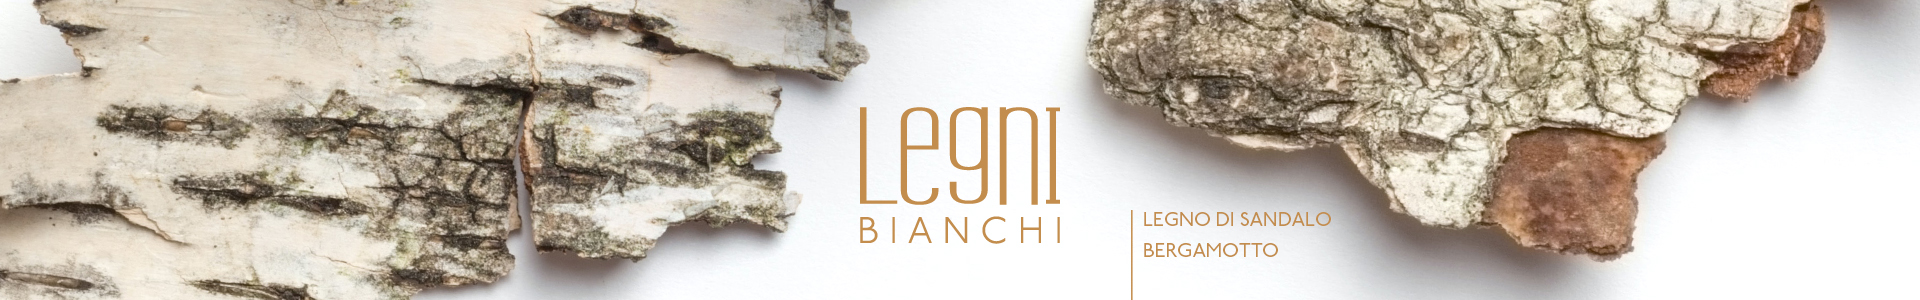 Legni-Bianchi-1920x300-021018-(1).jpg